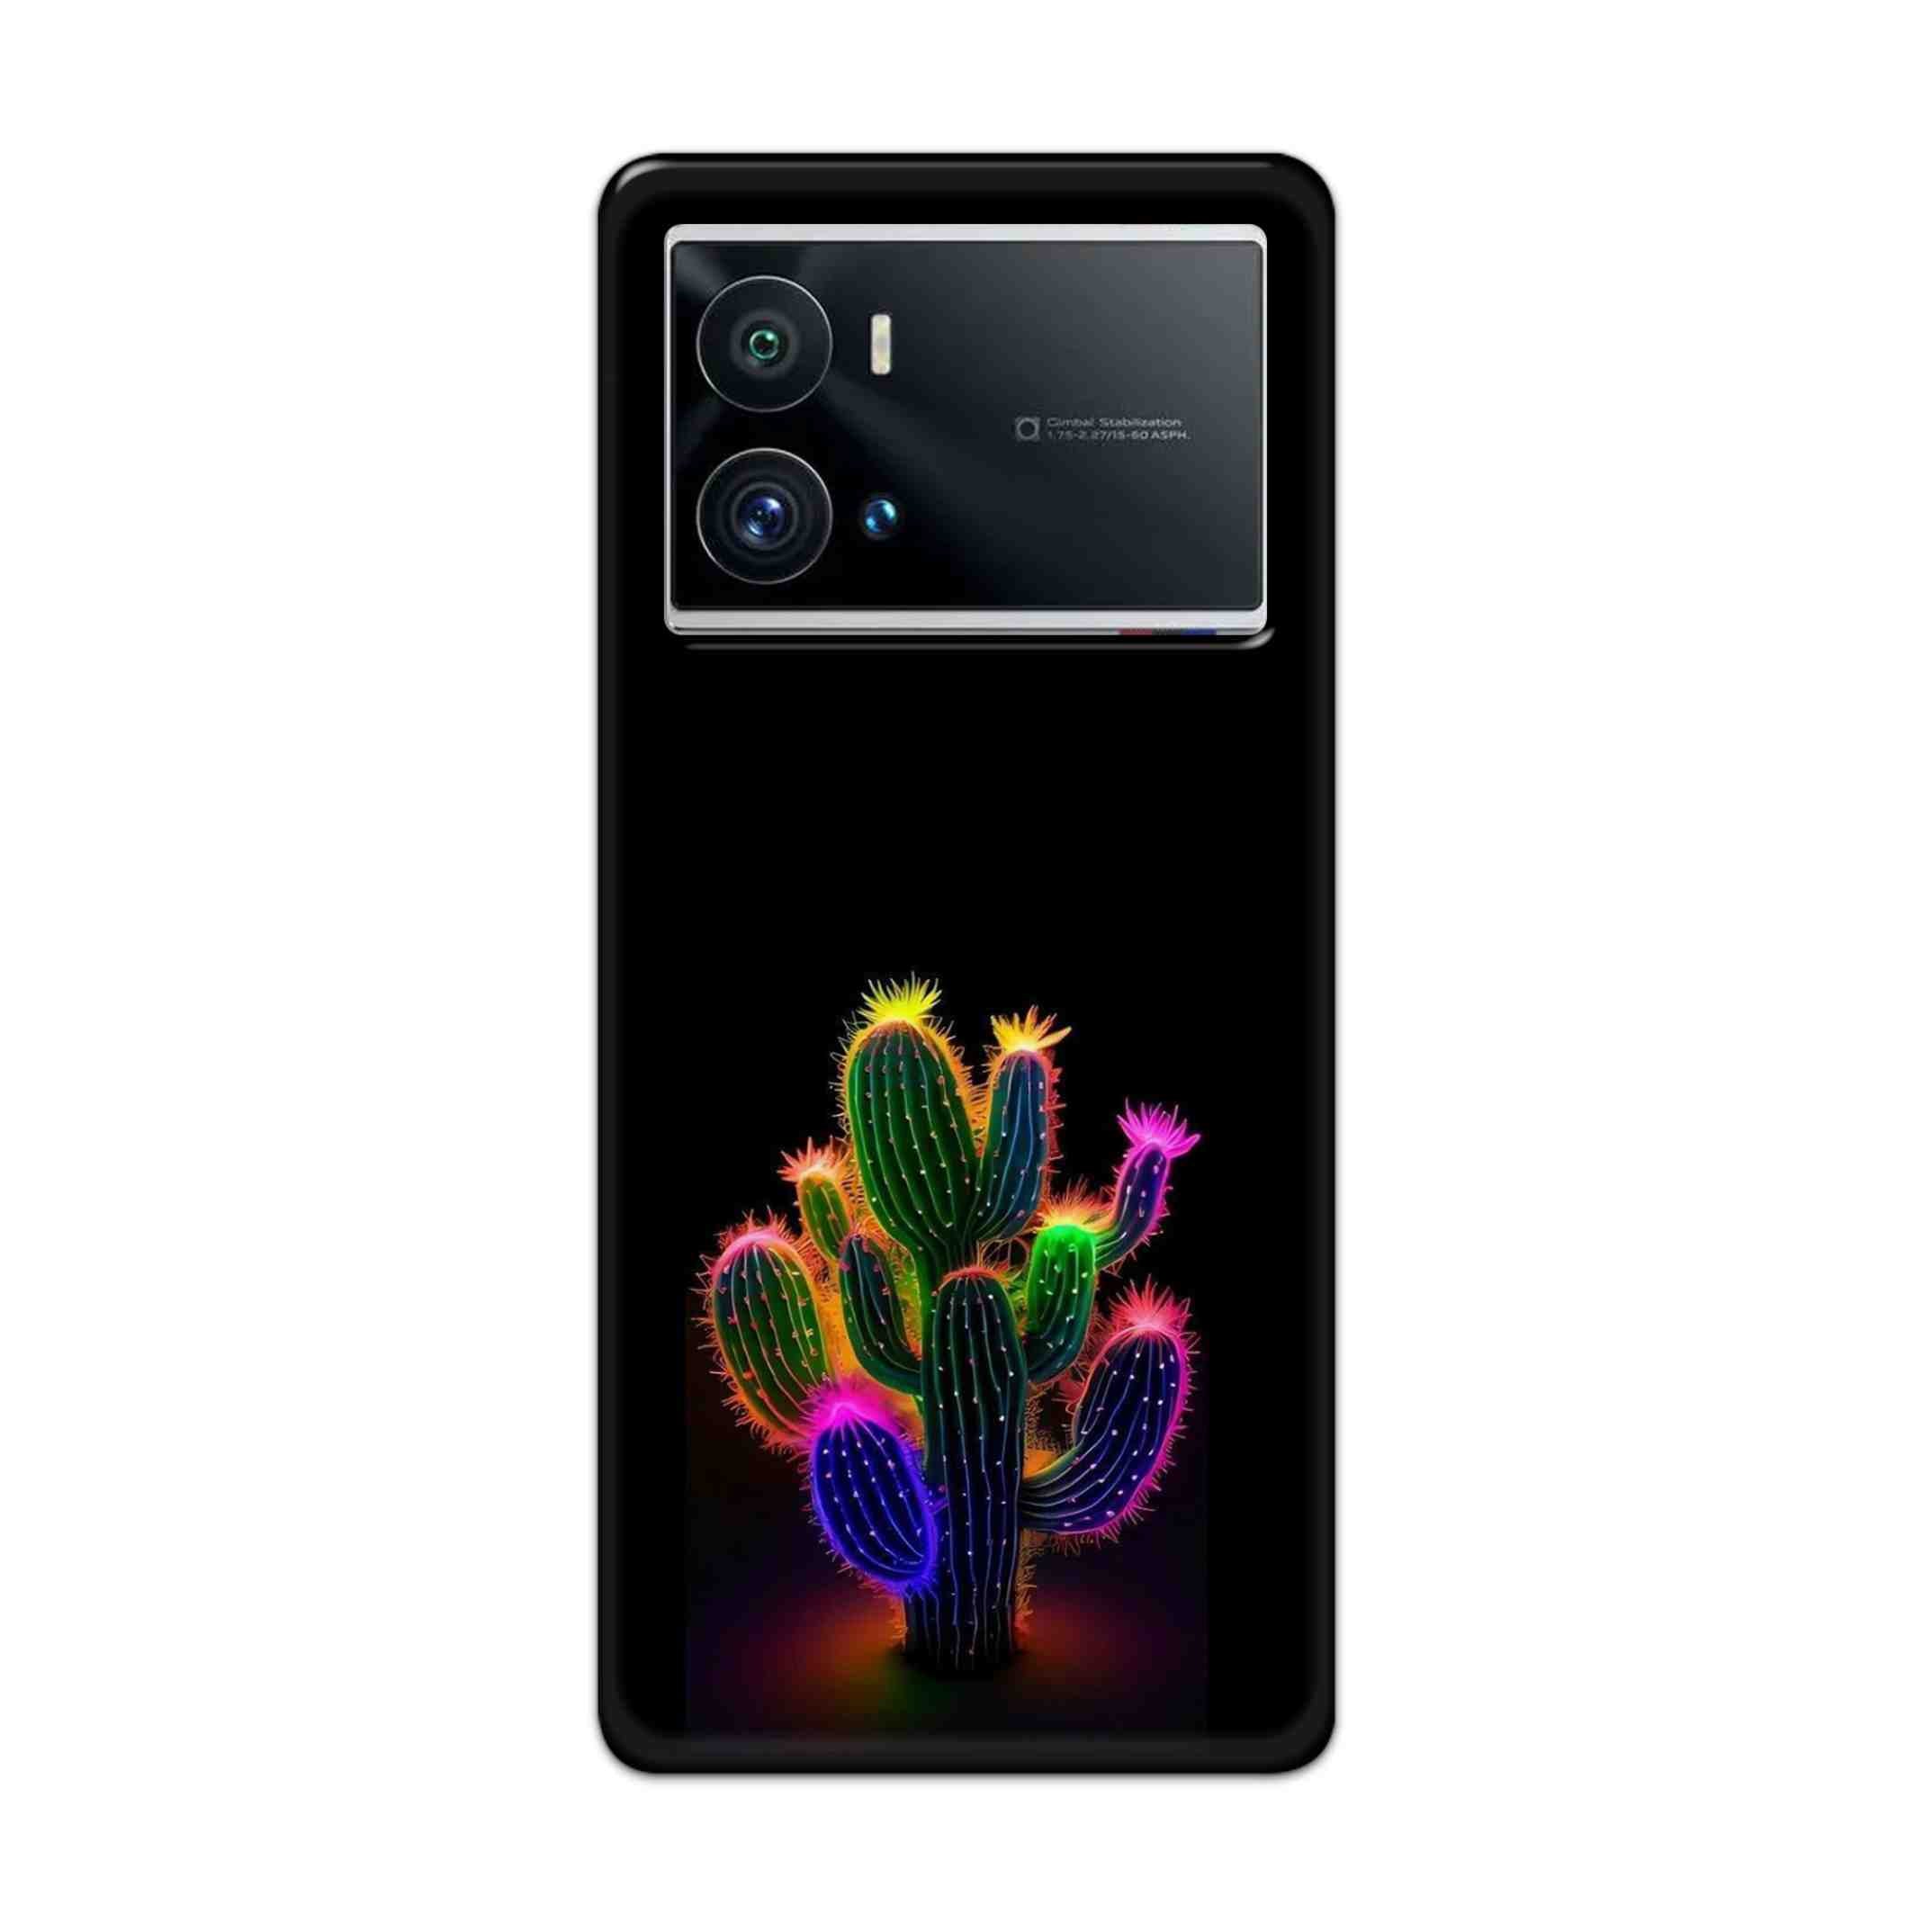 Buy Neon Flower Hard Back Mobile Phone Case Cover For iQOO 9 Pro 5G Online